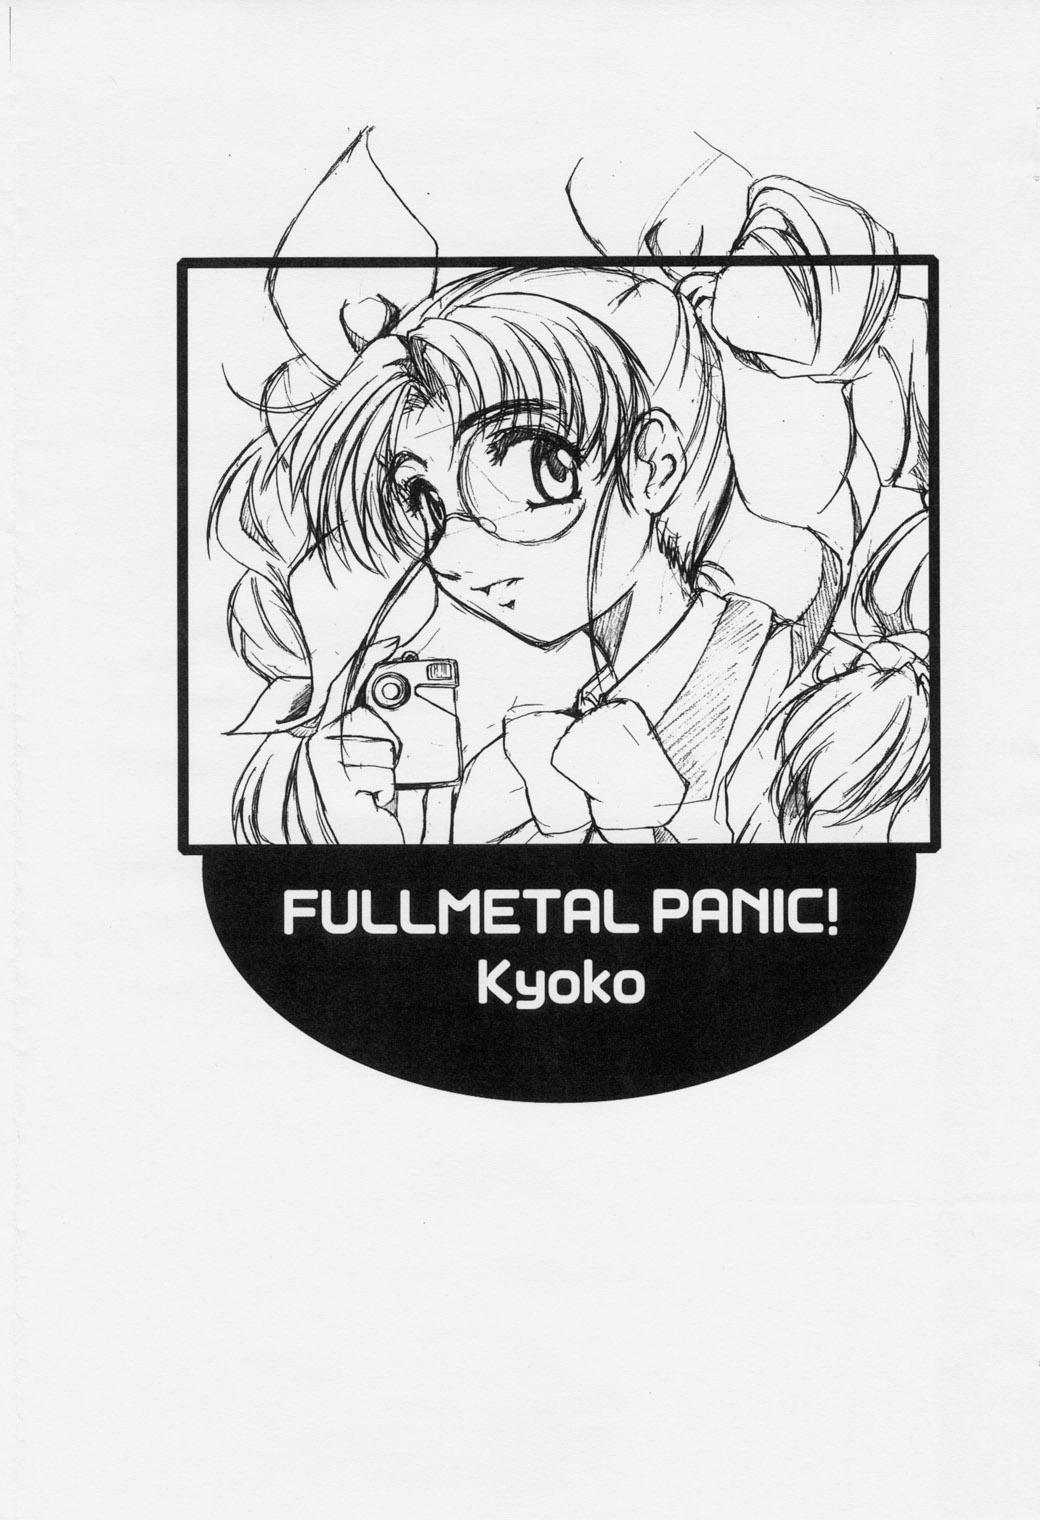 Perfect Butt FULLMETAL PANIC! Kyoko - Full metal panic Con - Picture 1